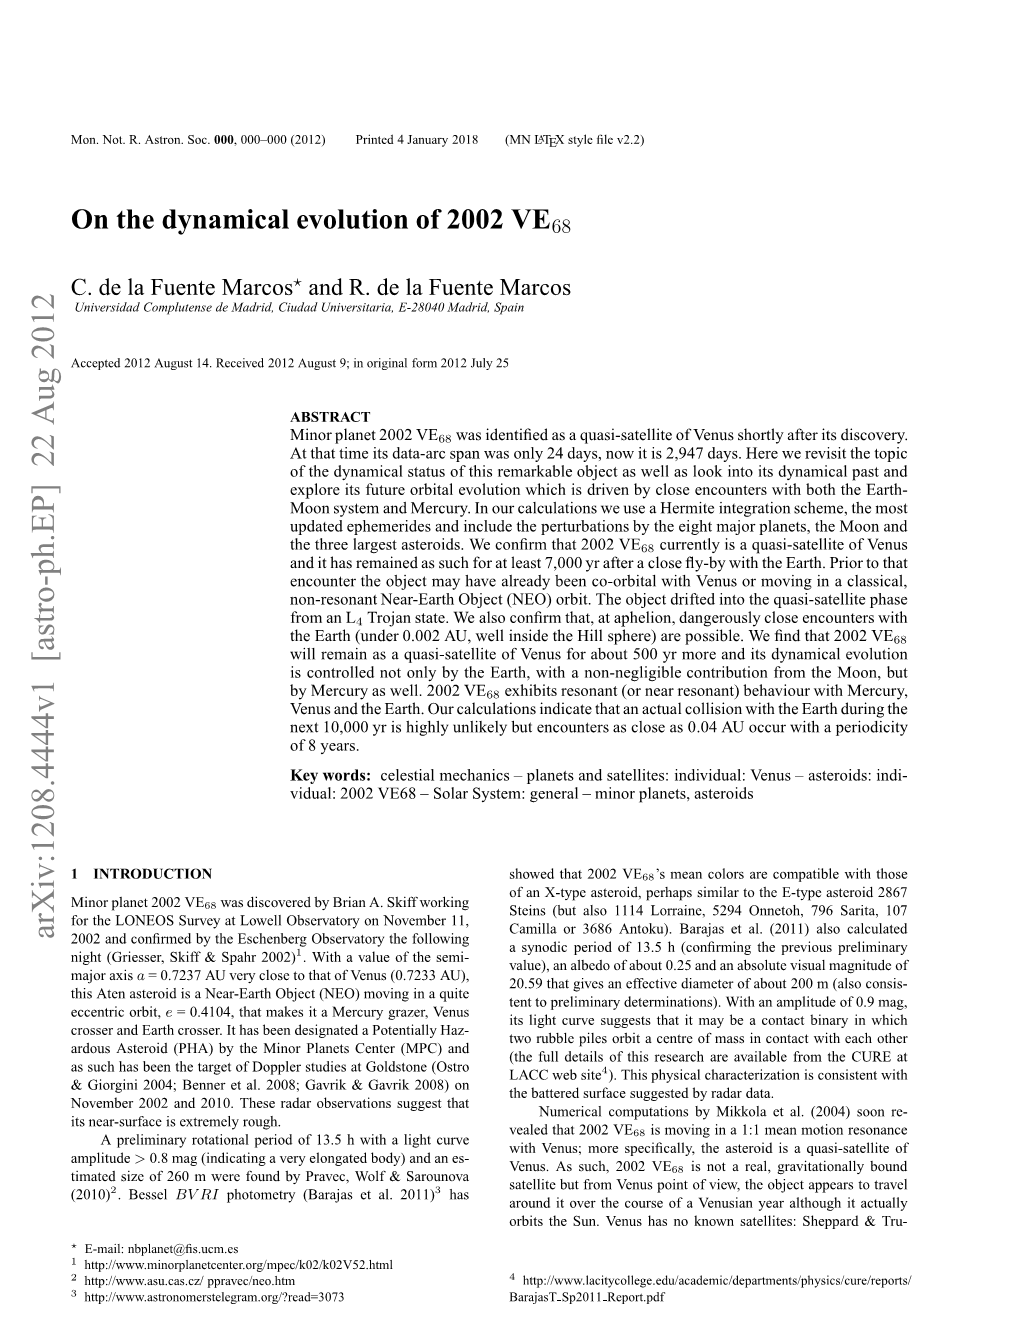 On the Dynamical Evolution of 2002 VE68 3